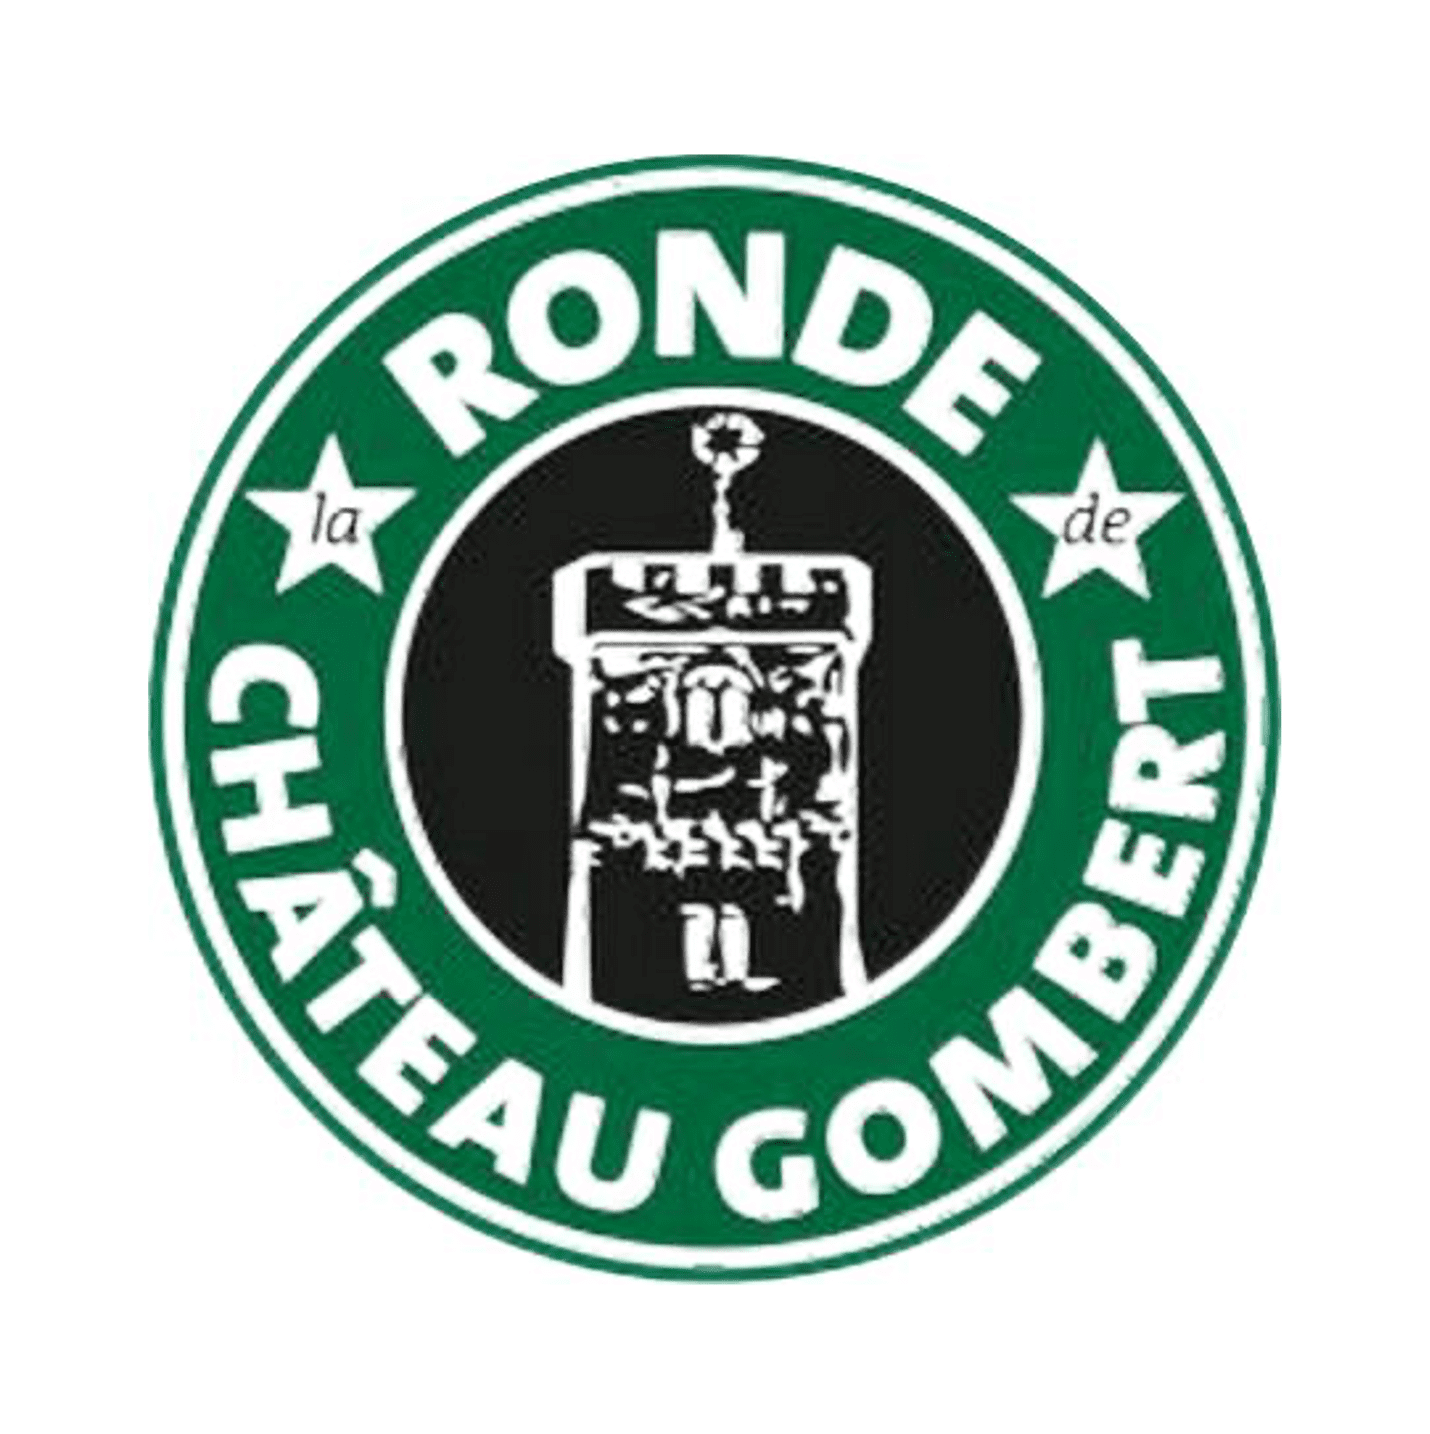 Logo Ronde de Château Gombert